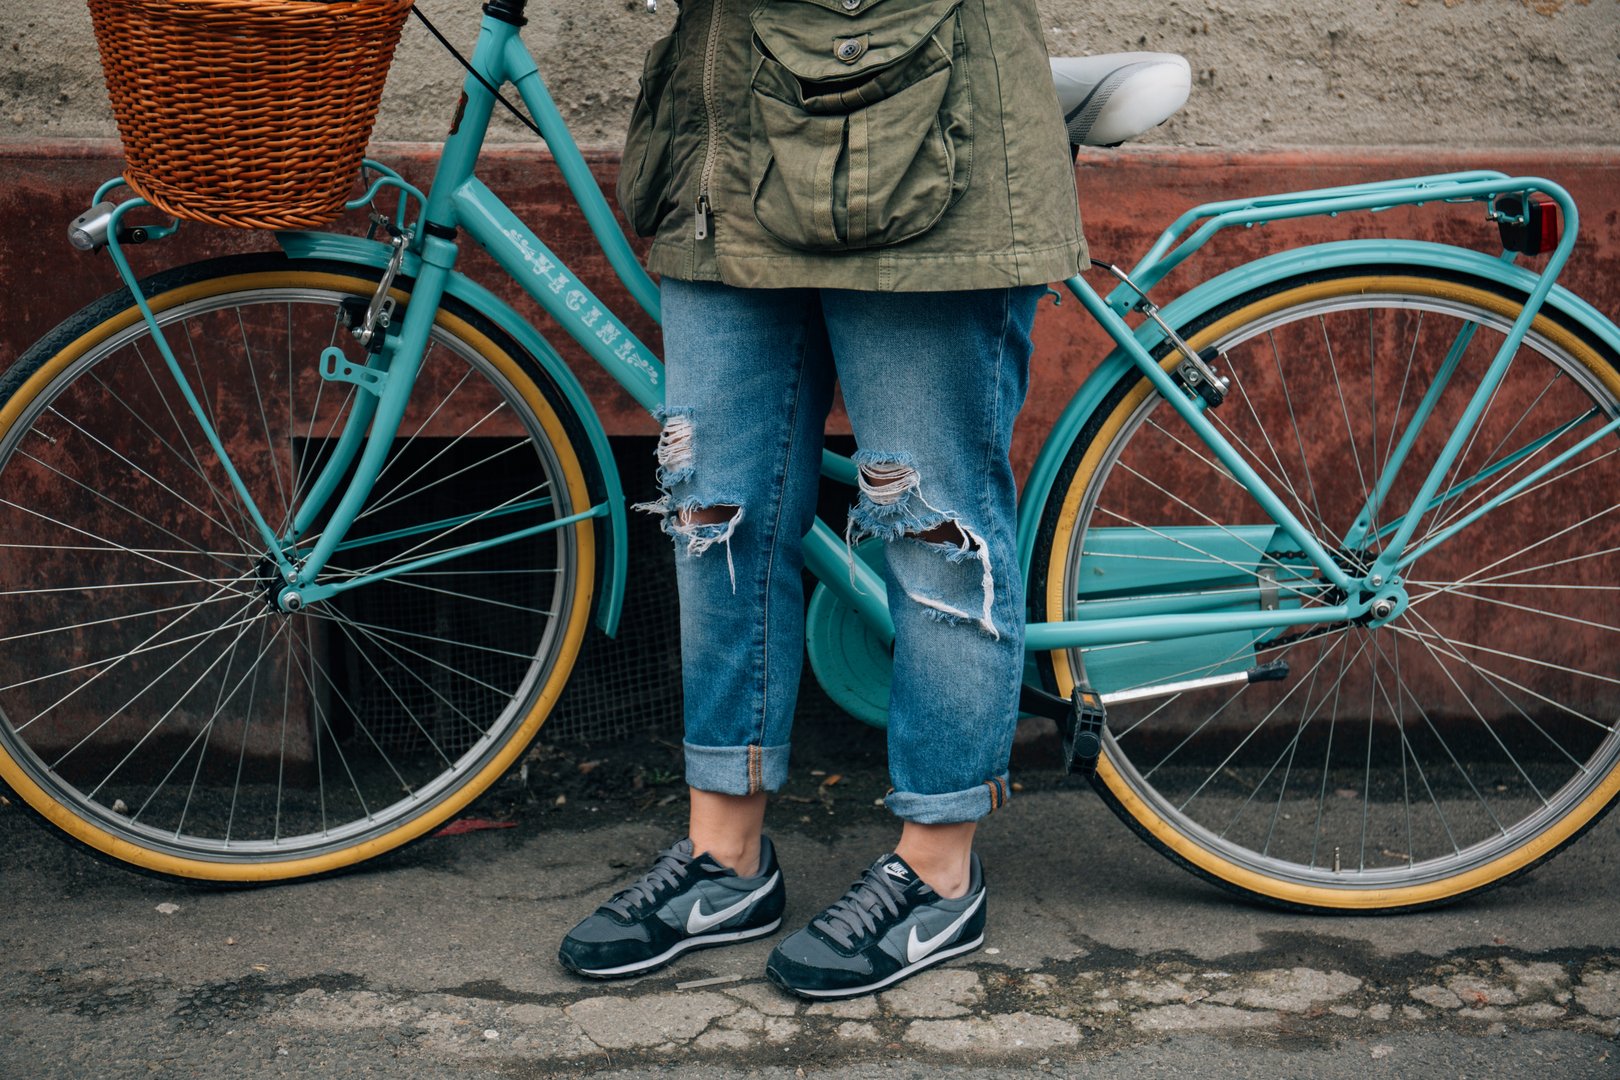 image Urban cycling workshops seek to empower women